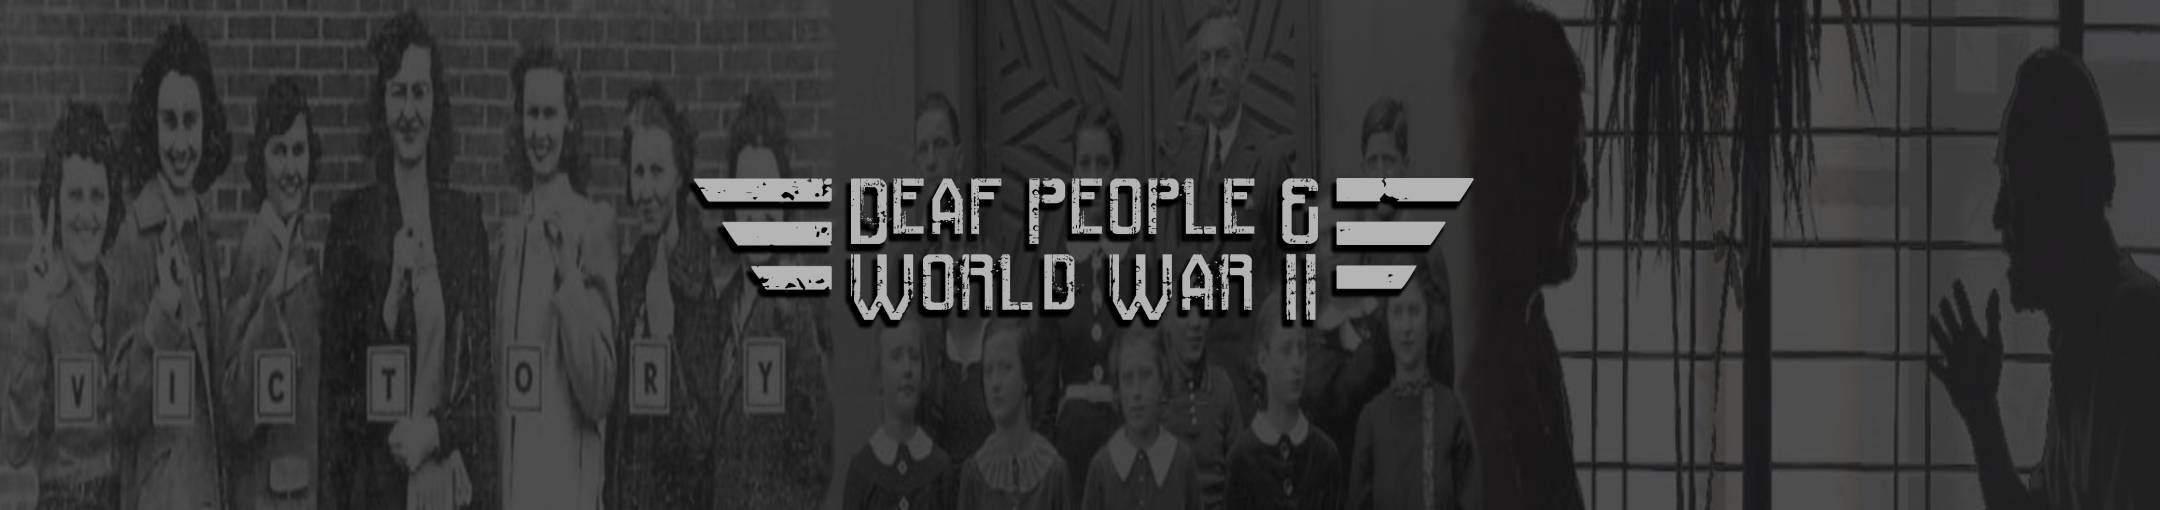 Deaf people of world war II